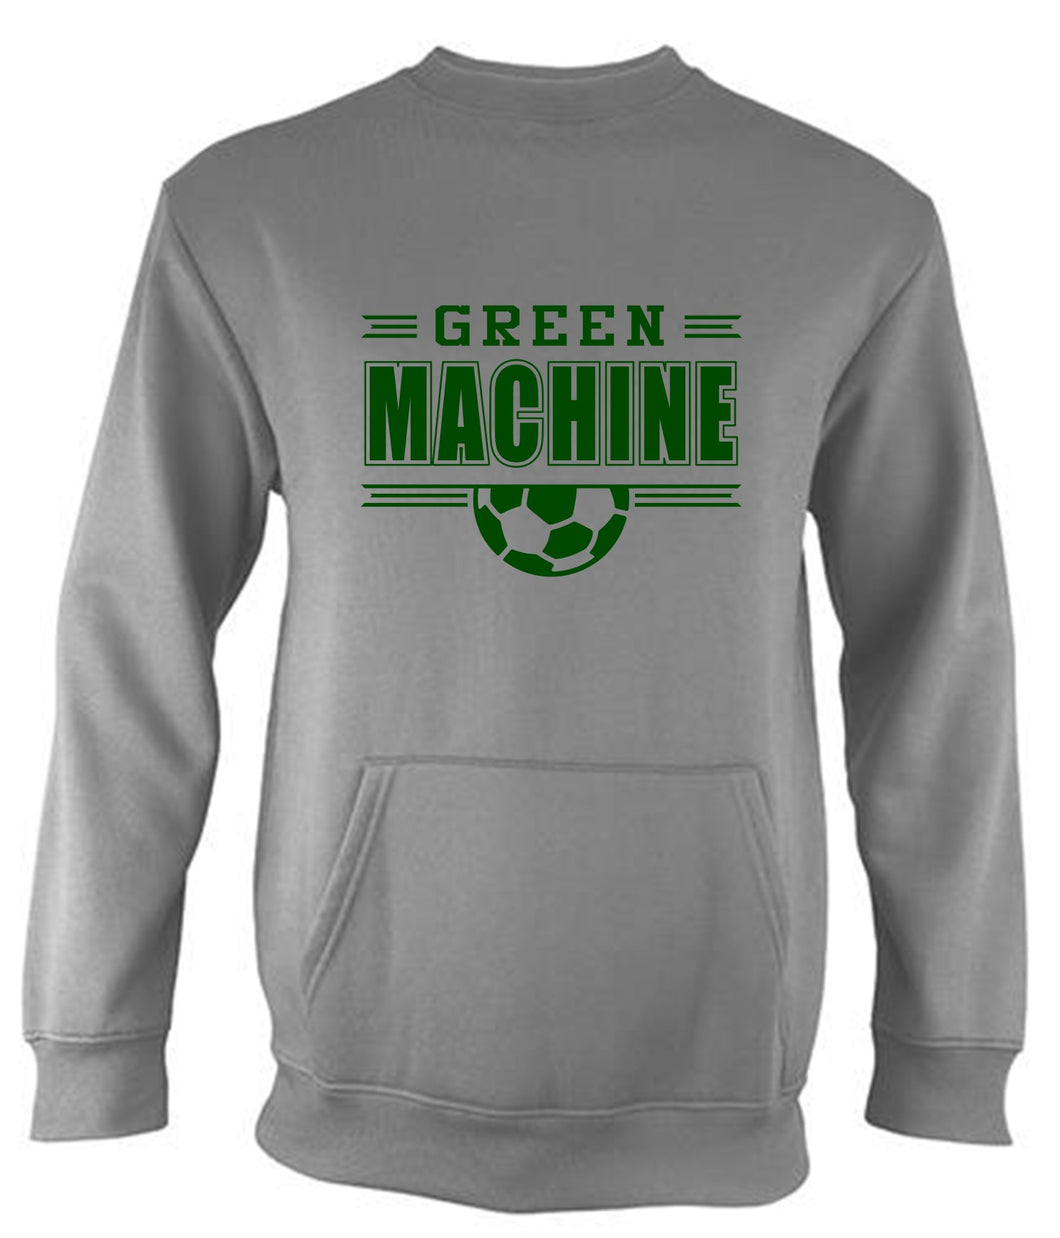 Green Machine Soccer Crewneck Sweatshirt (Youth and Adult)